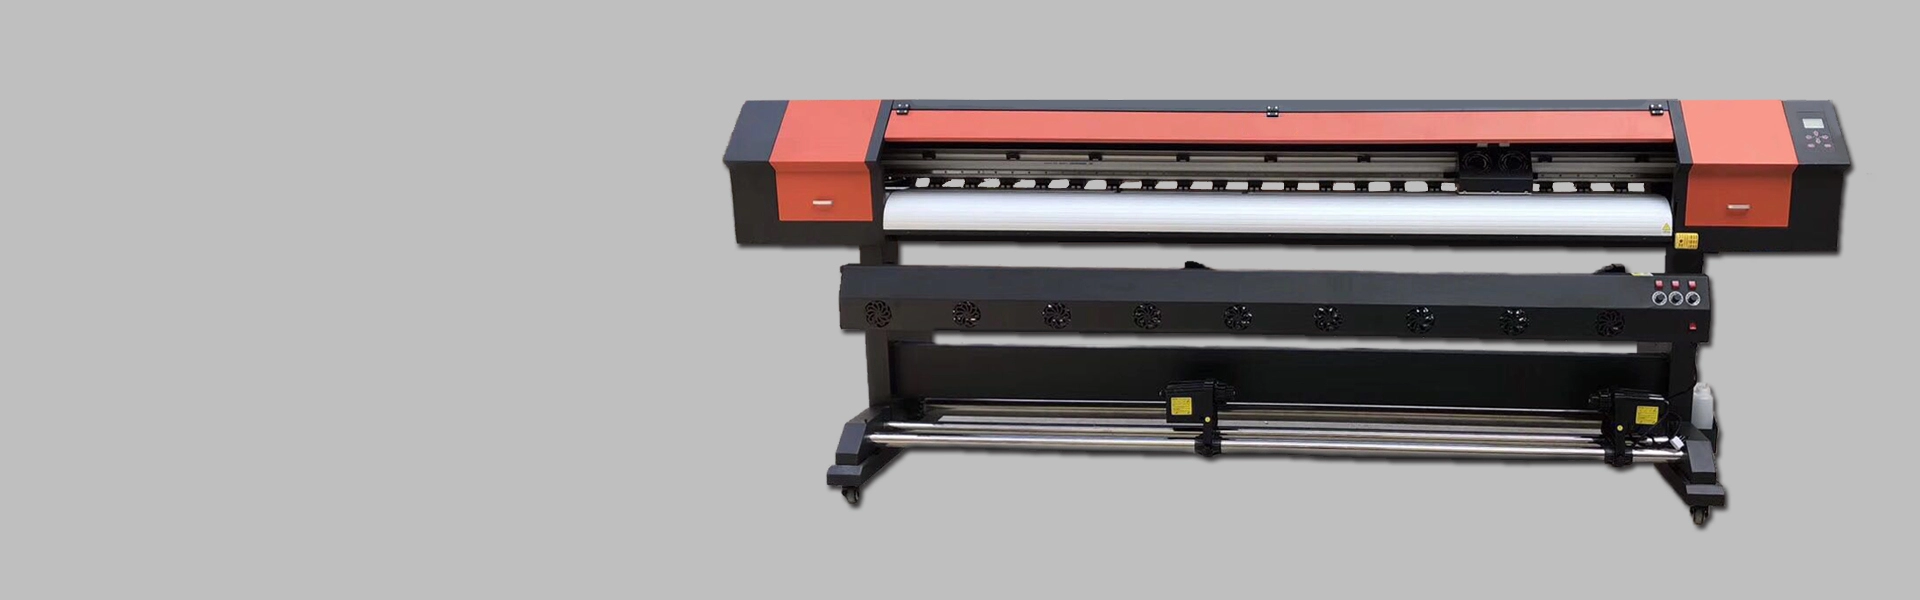 Imprimante XP600 de 2,5 m